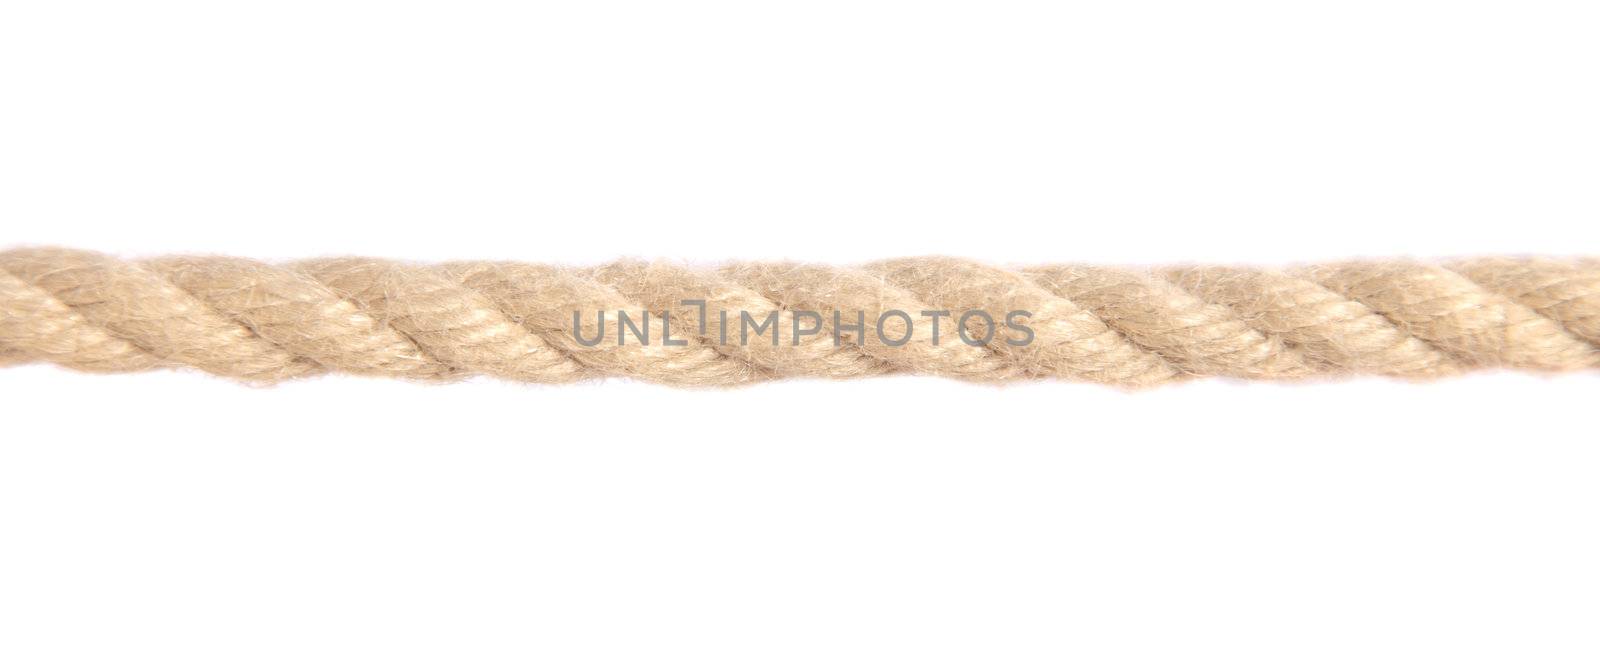 Standard hemp rope. All on white background.